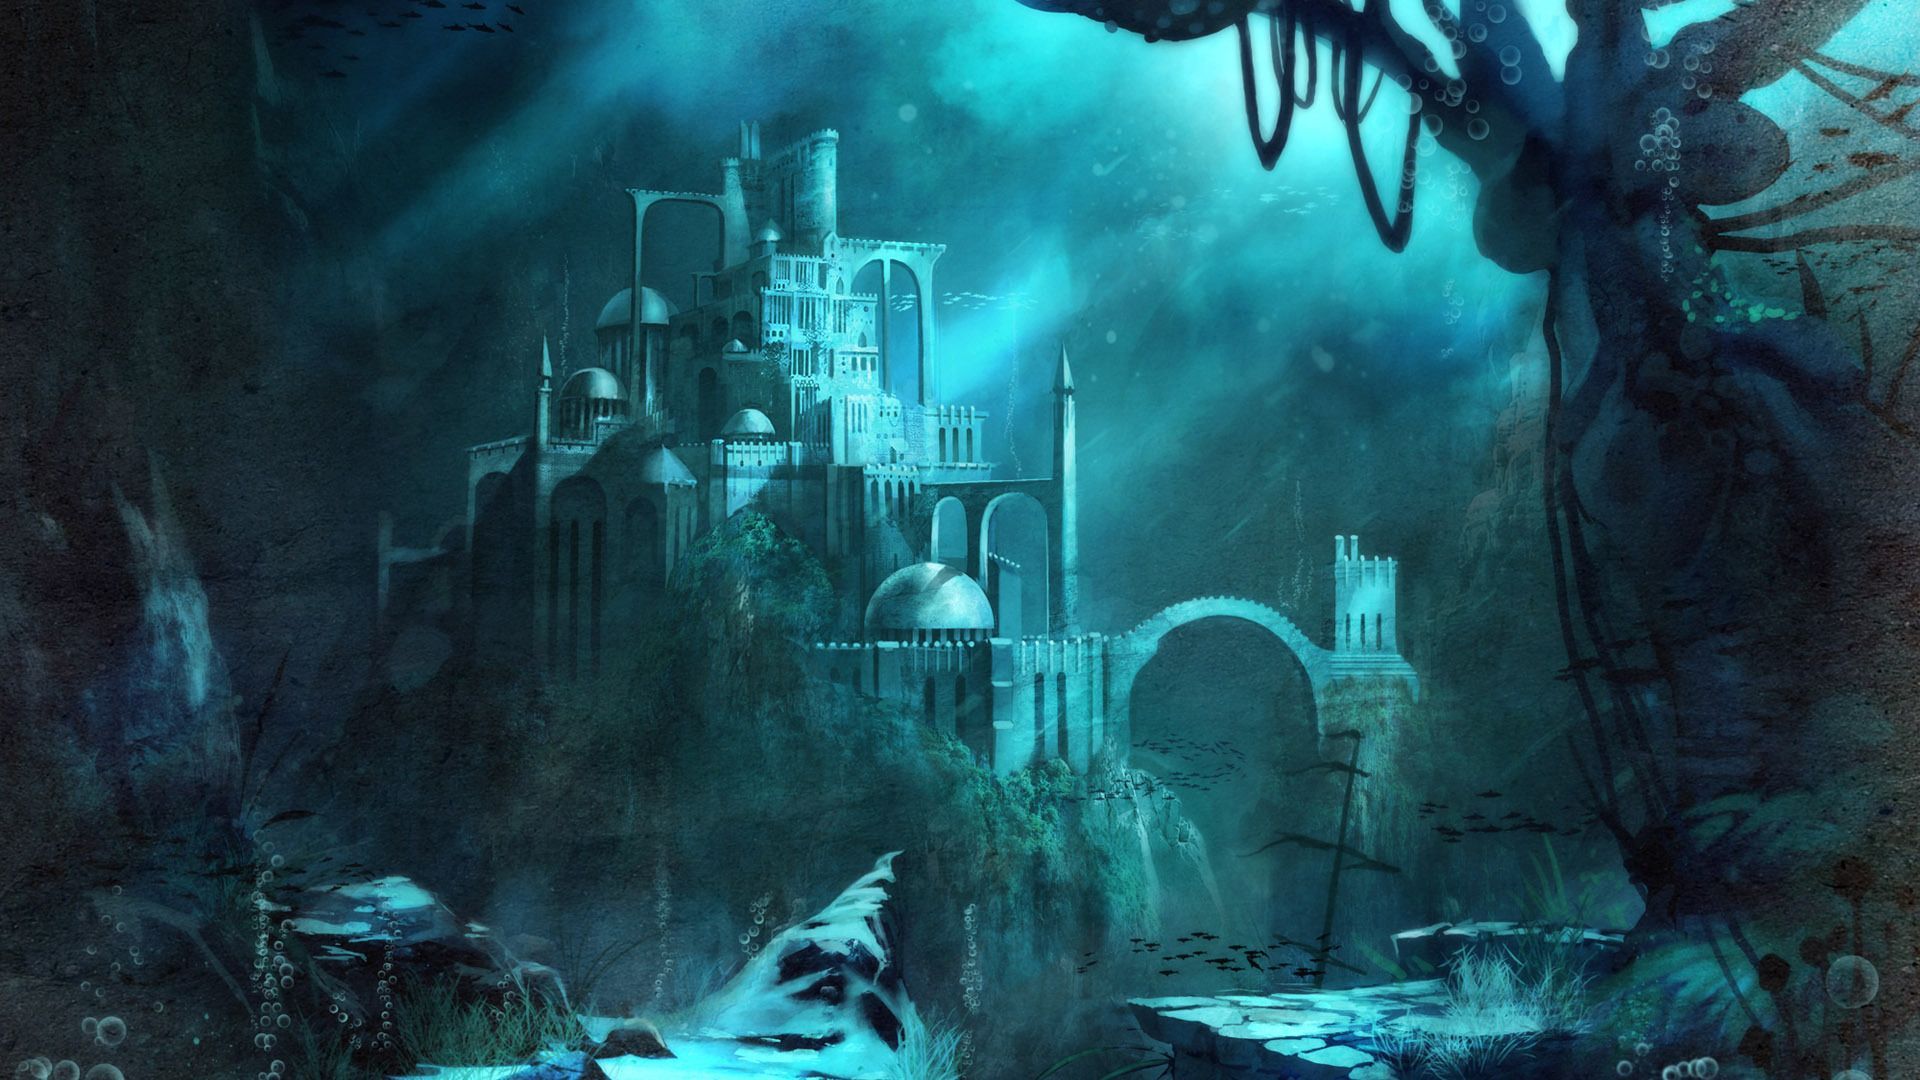 Underwater Castle. Underwater city, Underwater wallpaper, Lost city of atlantis